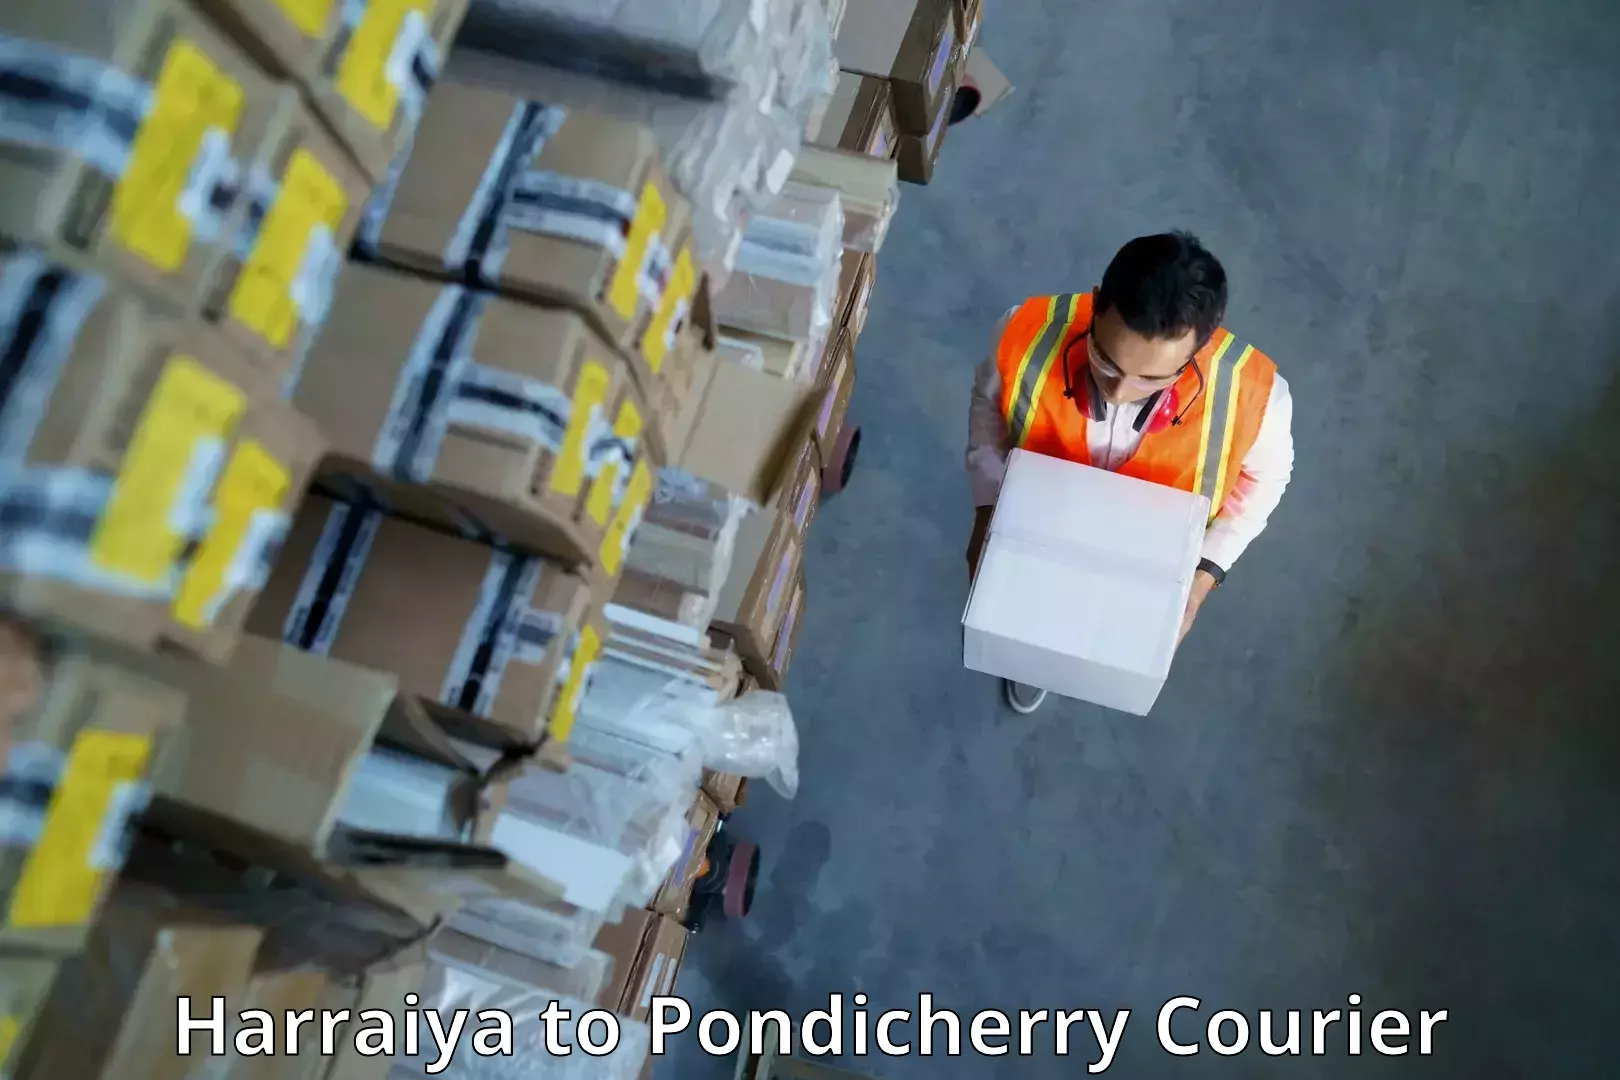 Efficient order fulfillment Harraiya to Pondicherry